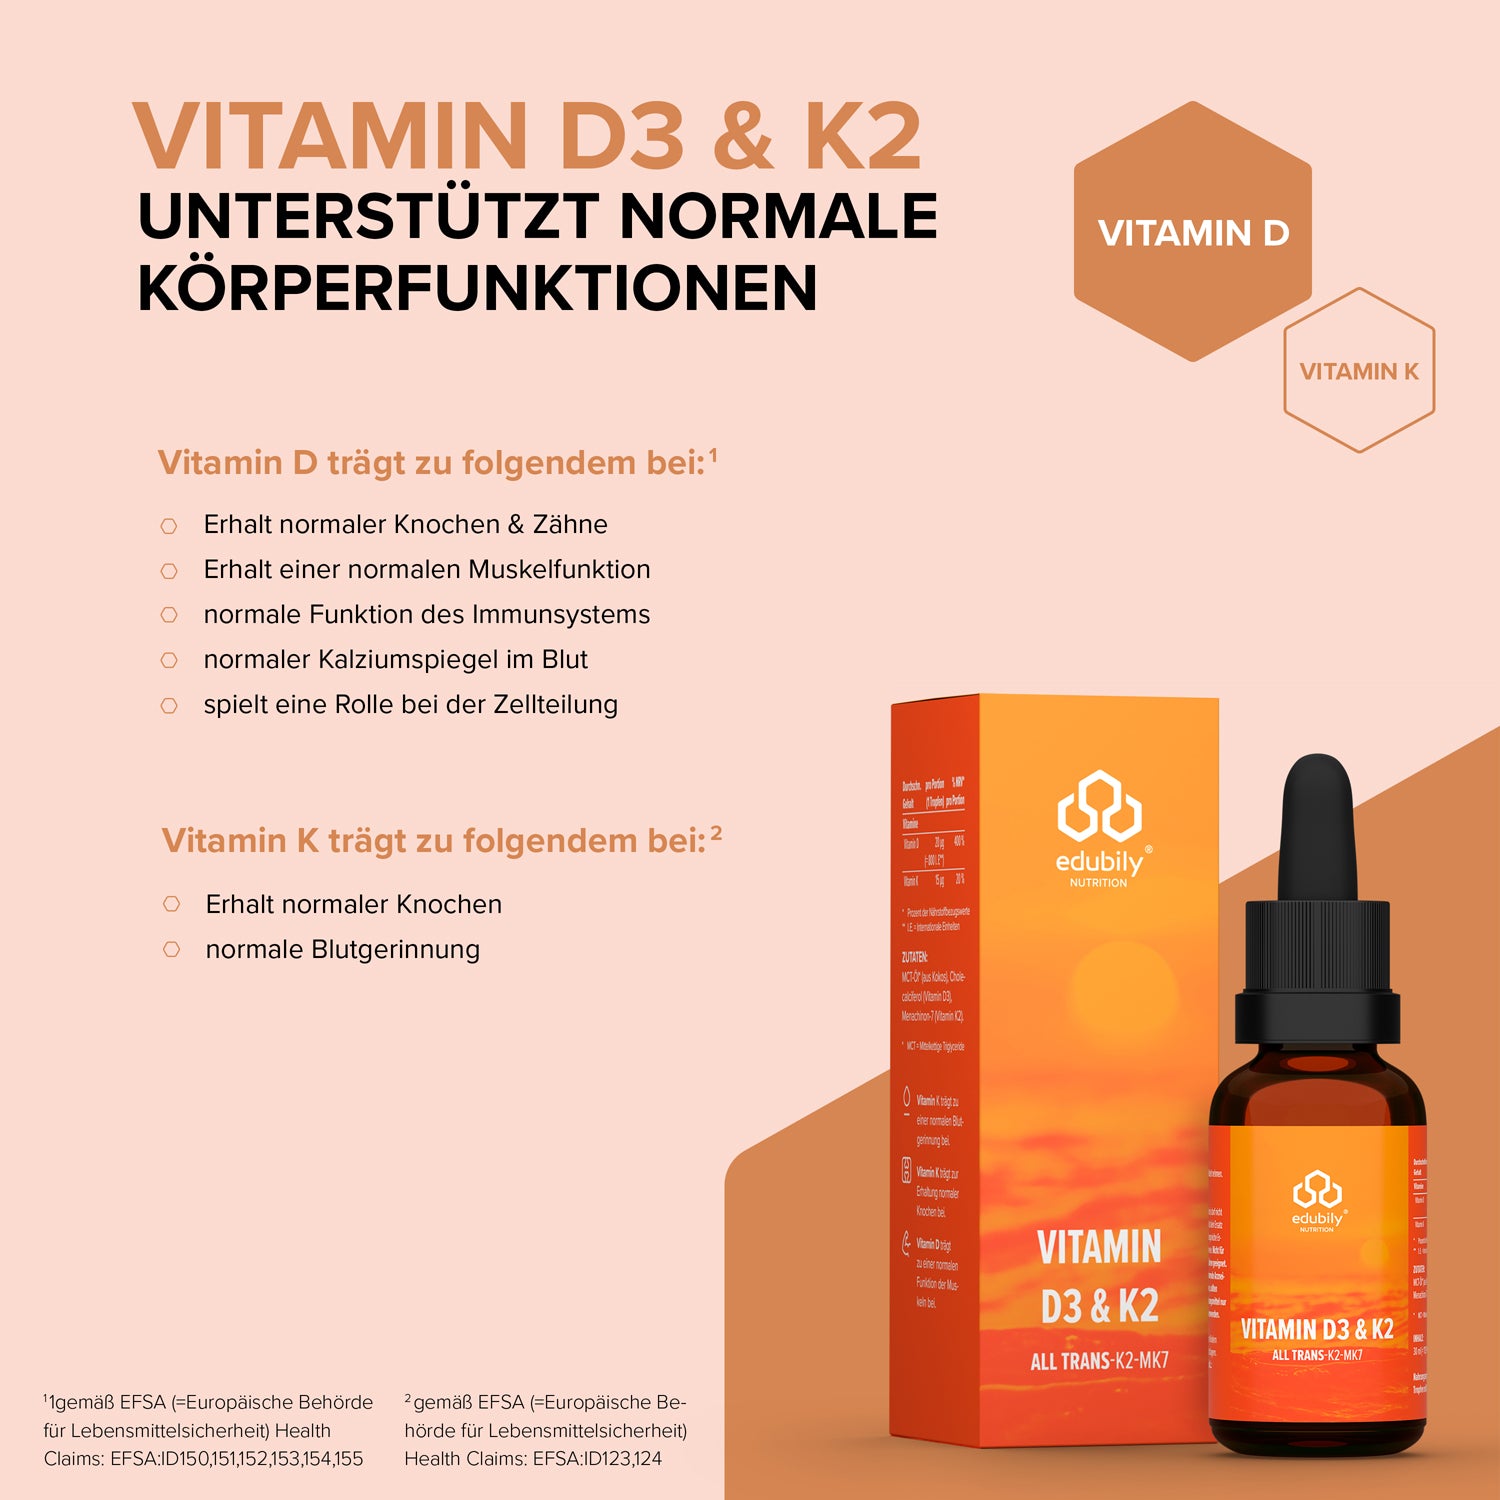 Vitamin D3 & K2 Tropfen